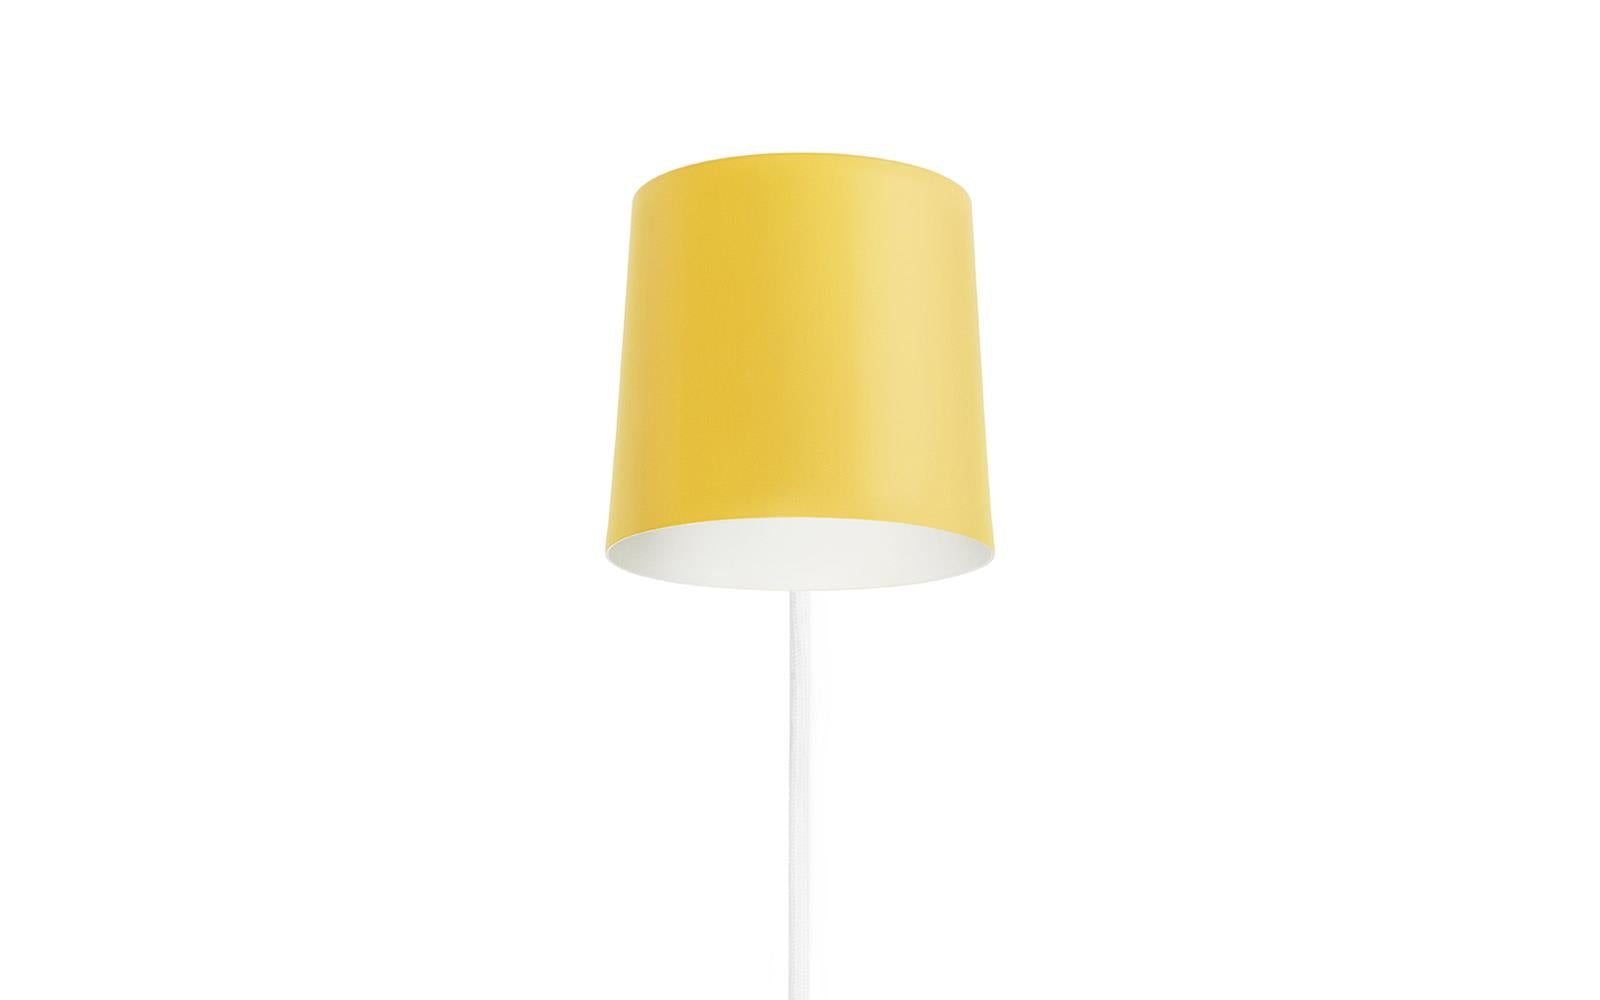 Rise lamp North American version Yellow